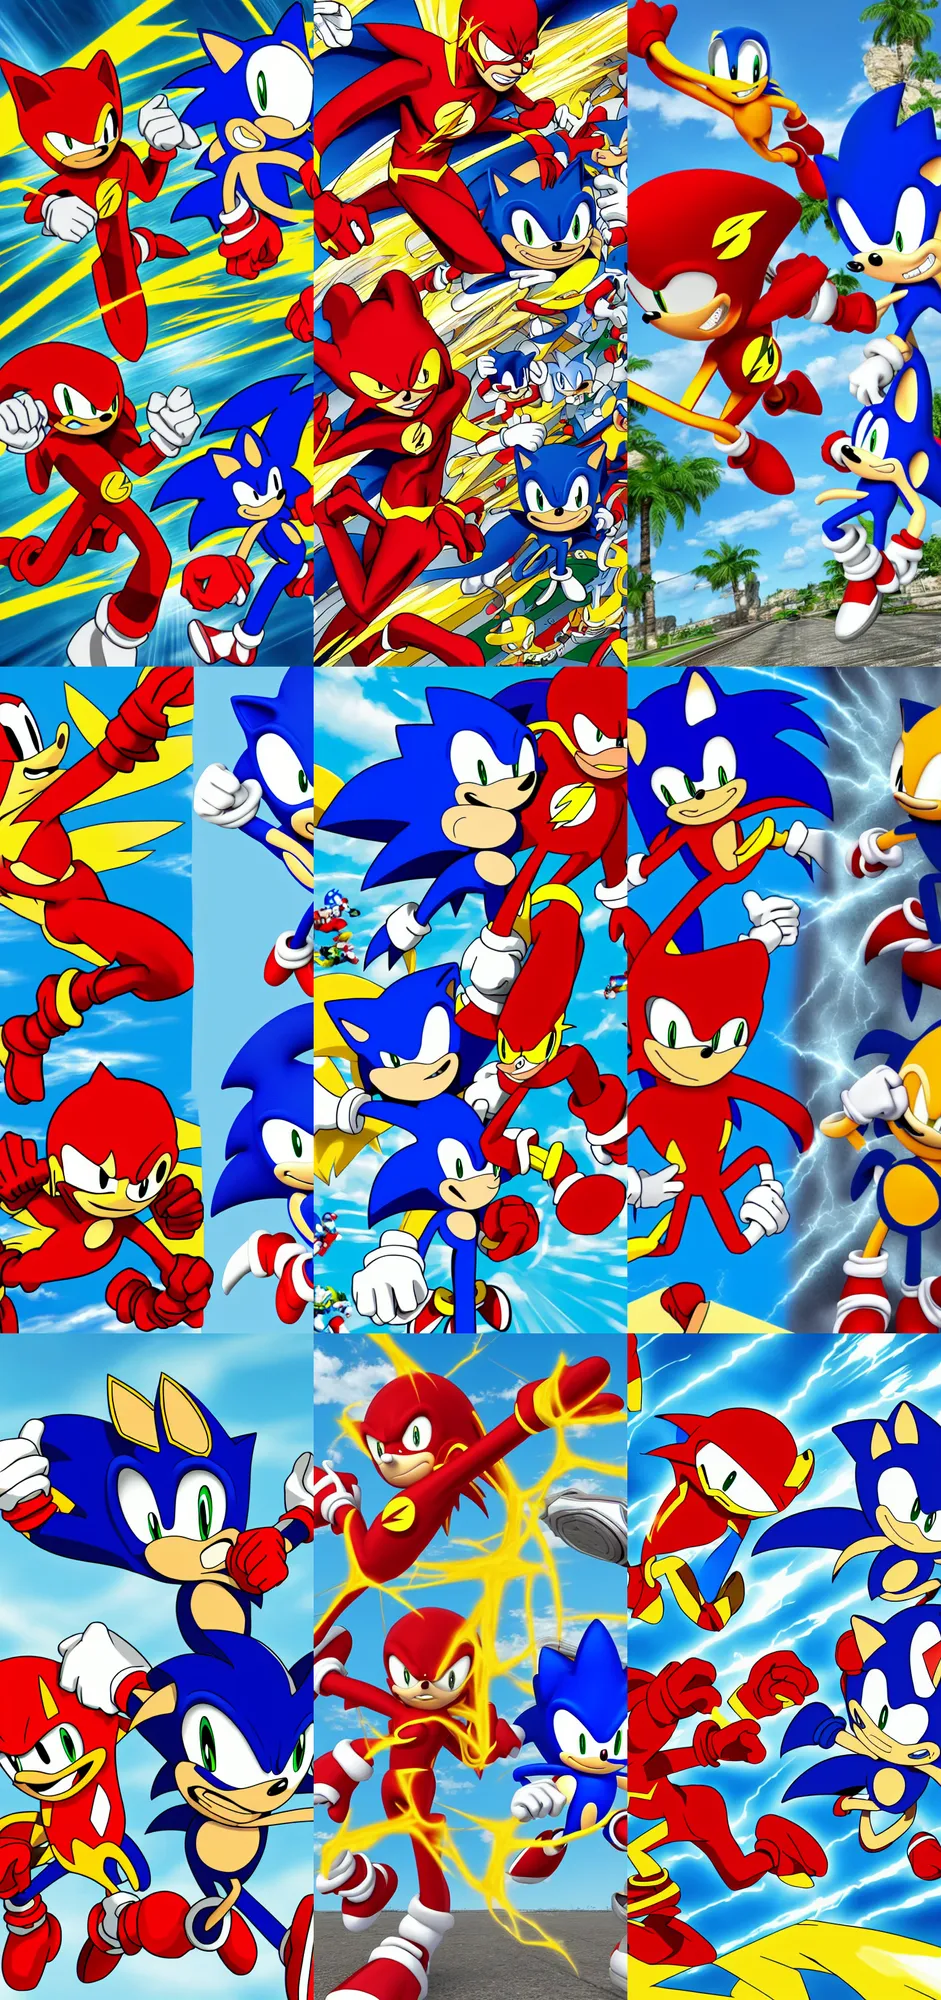 Prompt: Flash vs Sonic,8k resolution,3d,-W 540